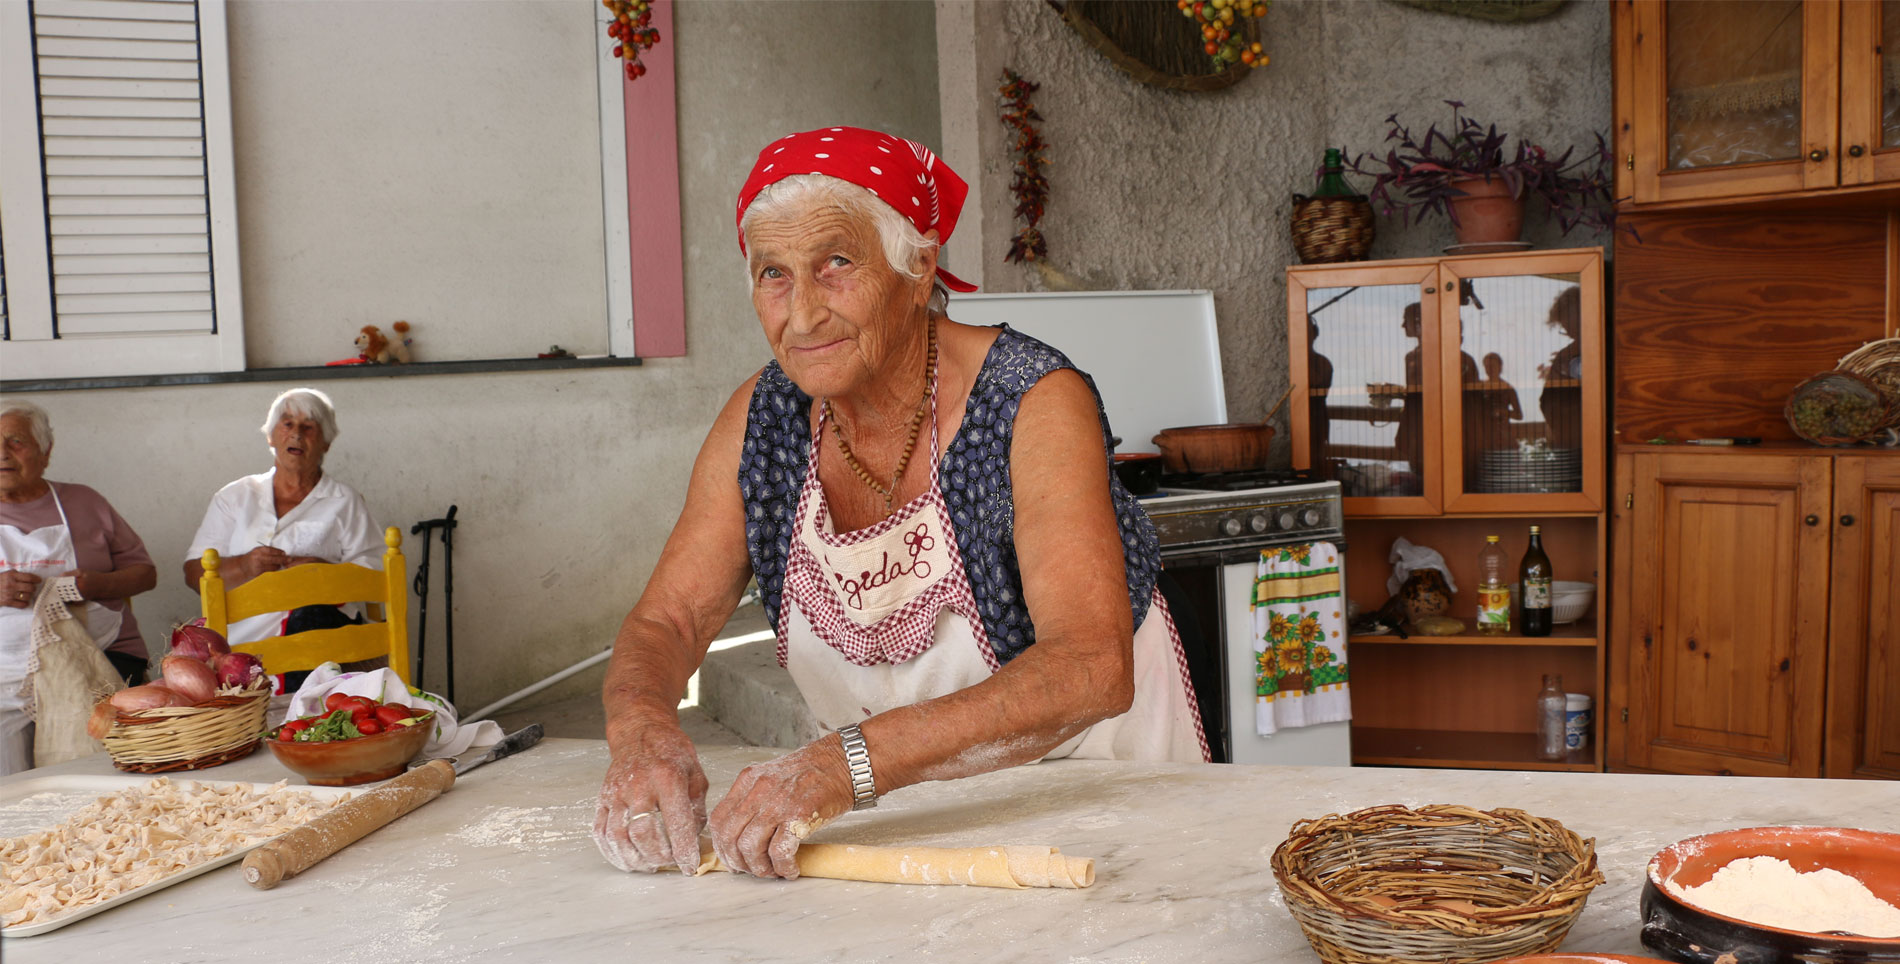 Pasta Grannies Take Tradition Digital